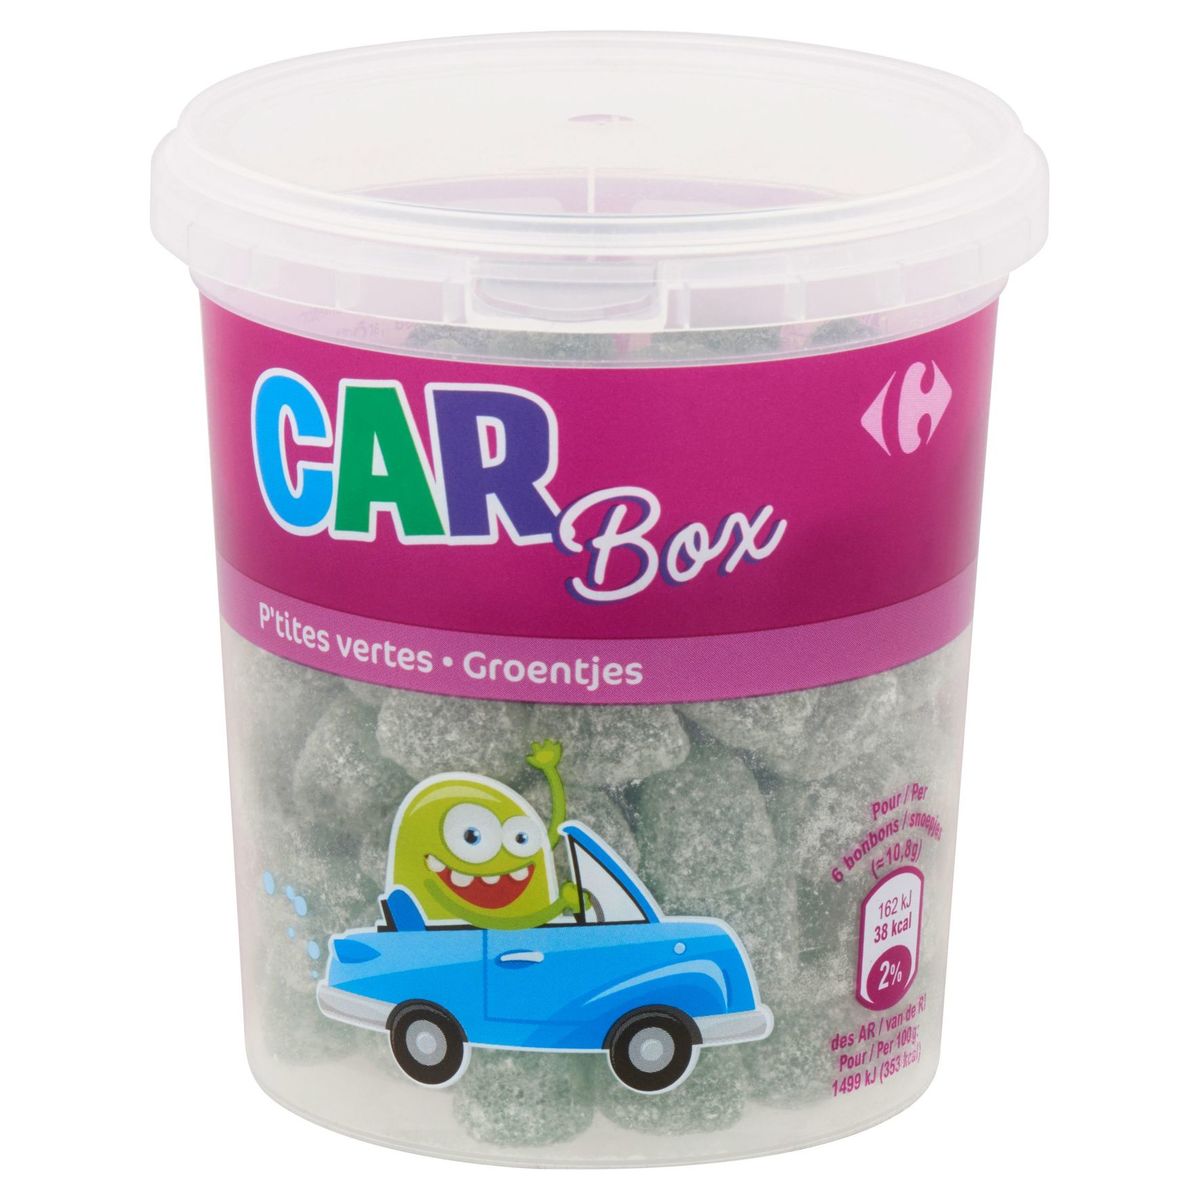 Carrefour Car Box Groentjes 220 g